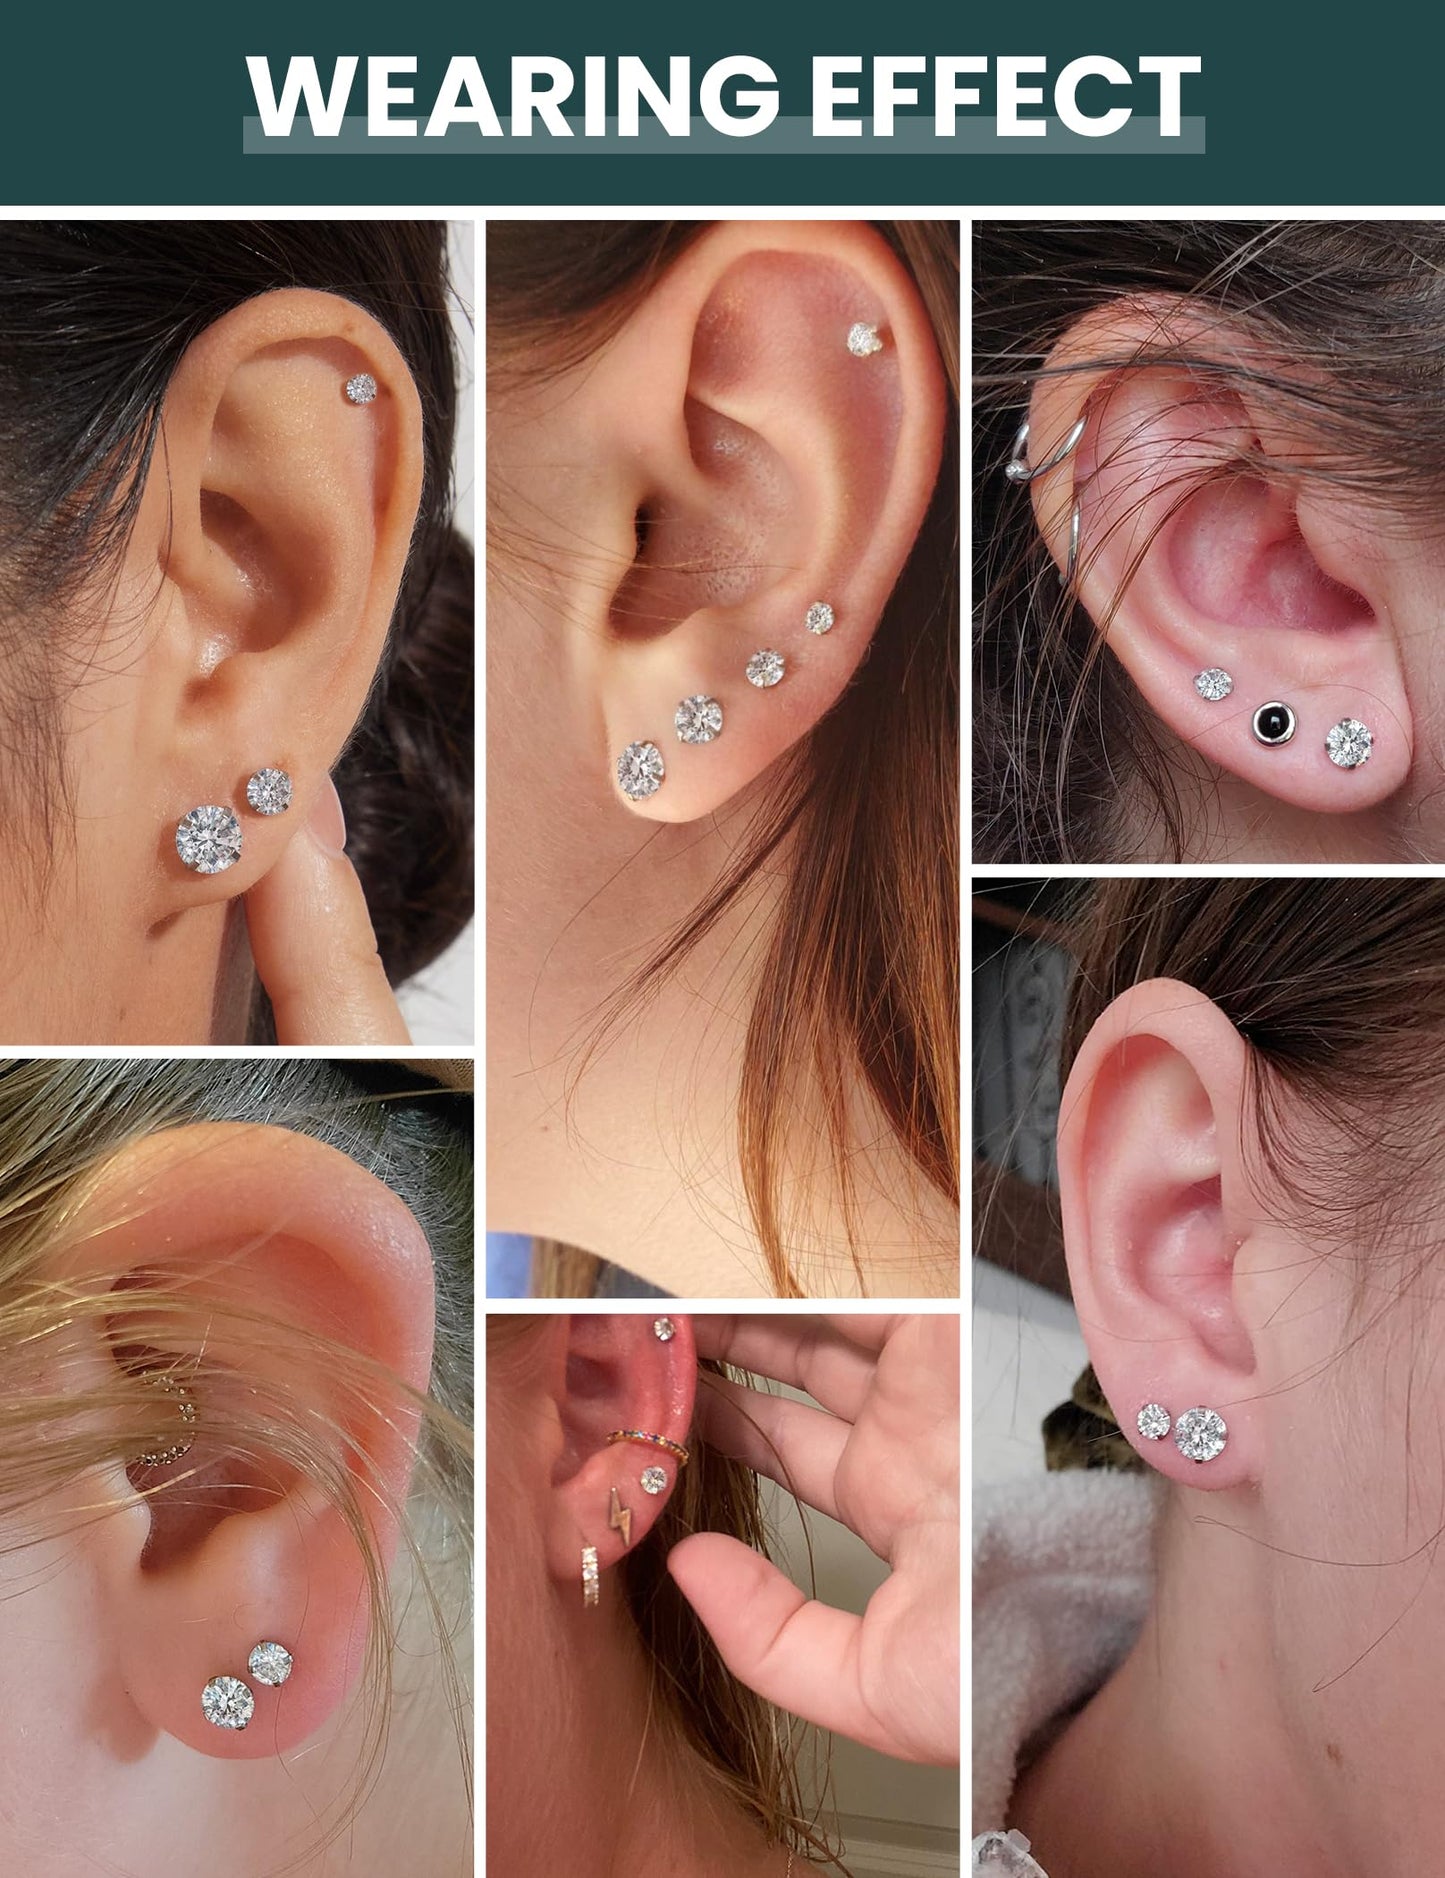 5 Pairs Stud Earrings Set, Hypoallergenic Cubic Zirconia 316L Earrings Stainless Steel CZ Earrings 3-8mm (Steel color)